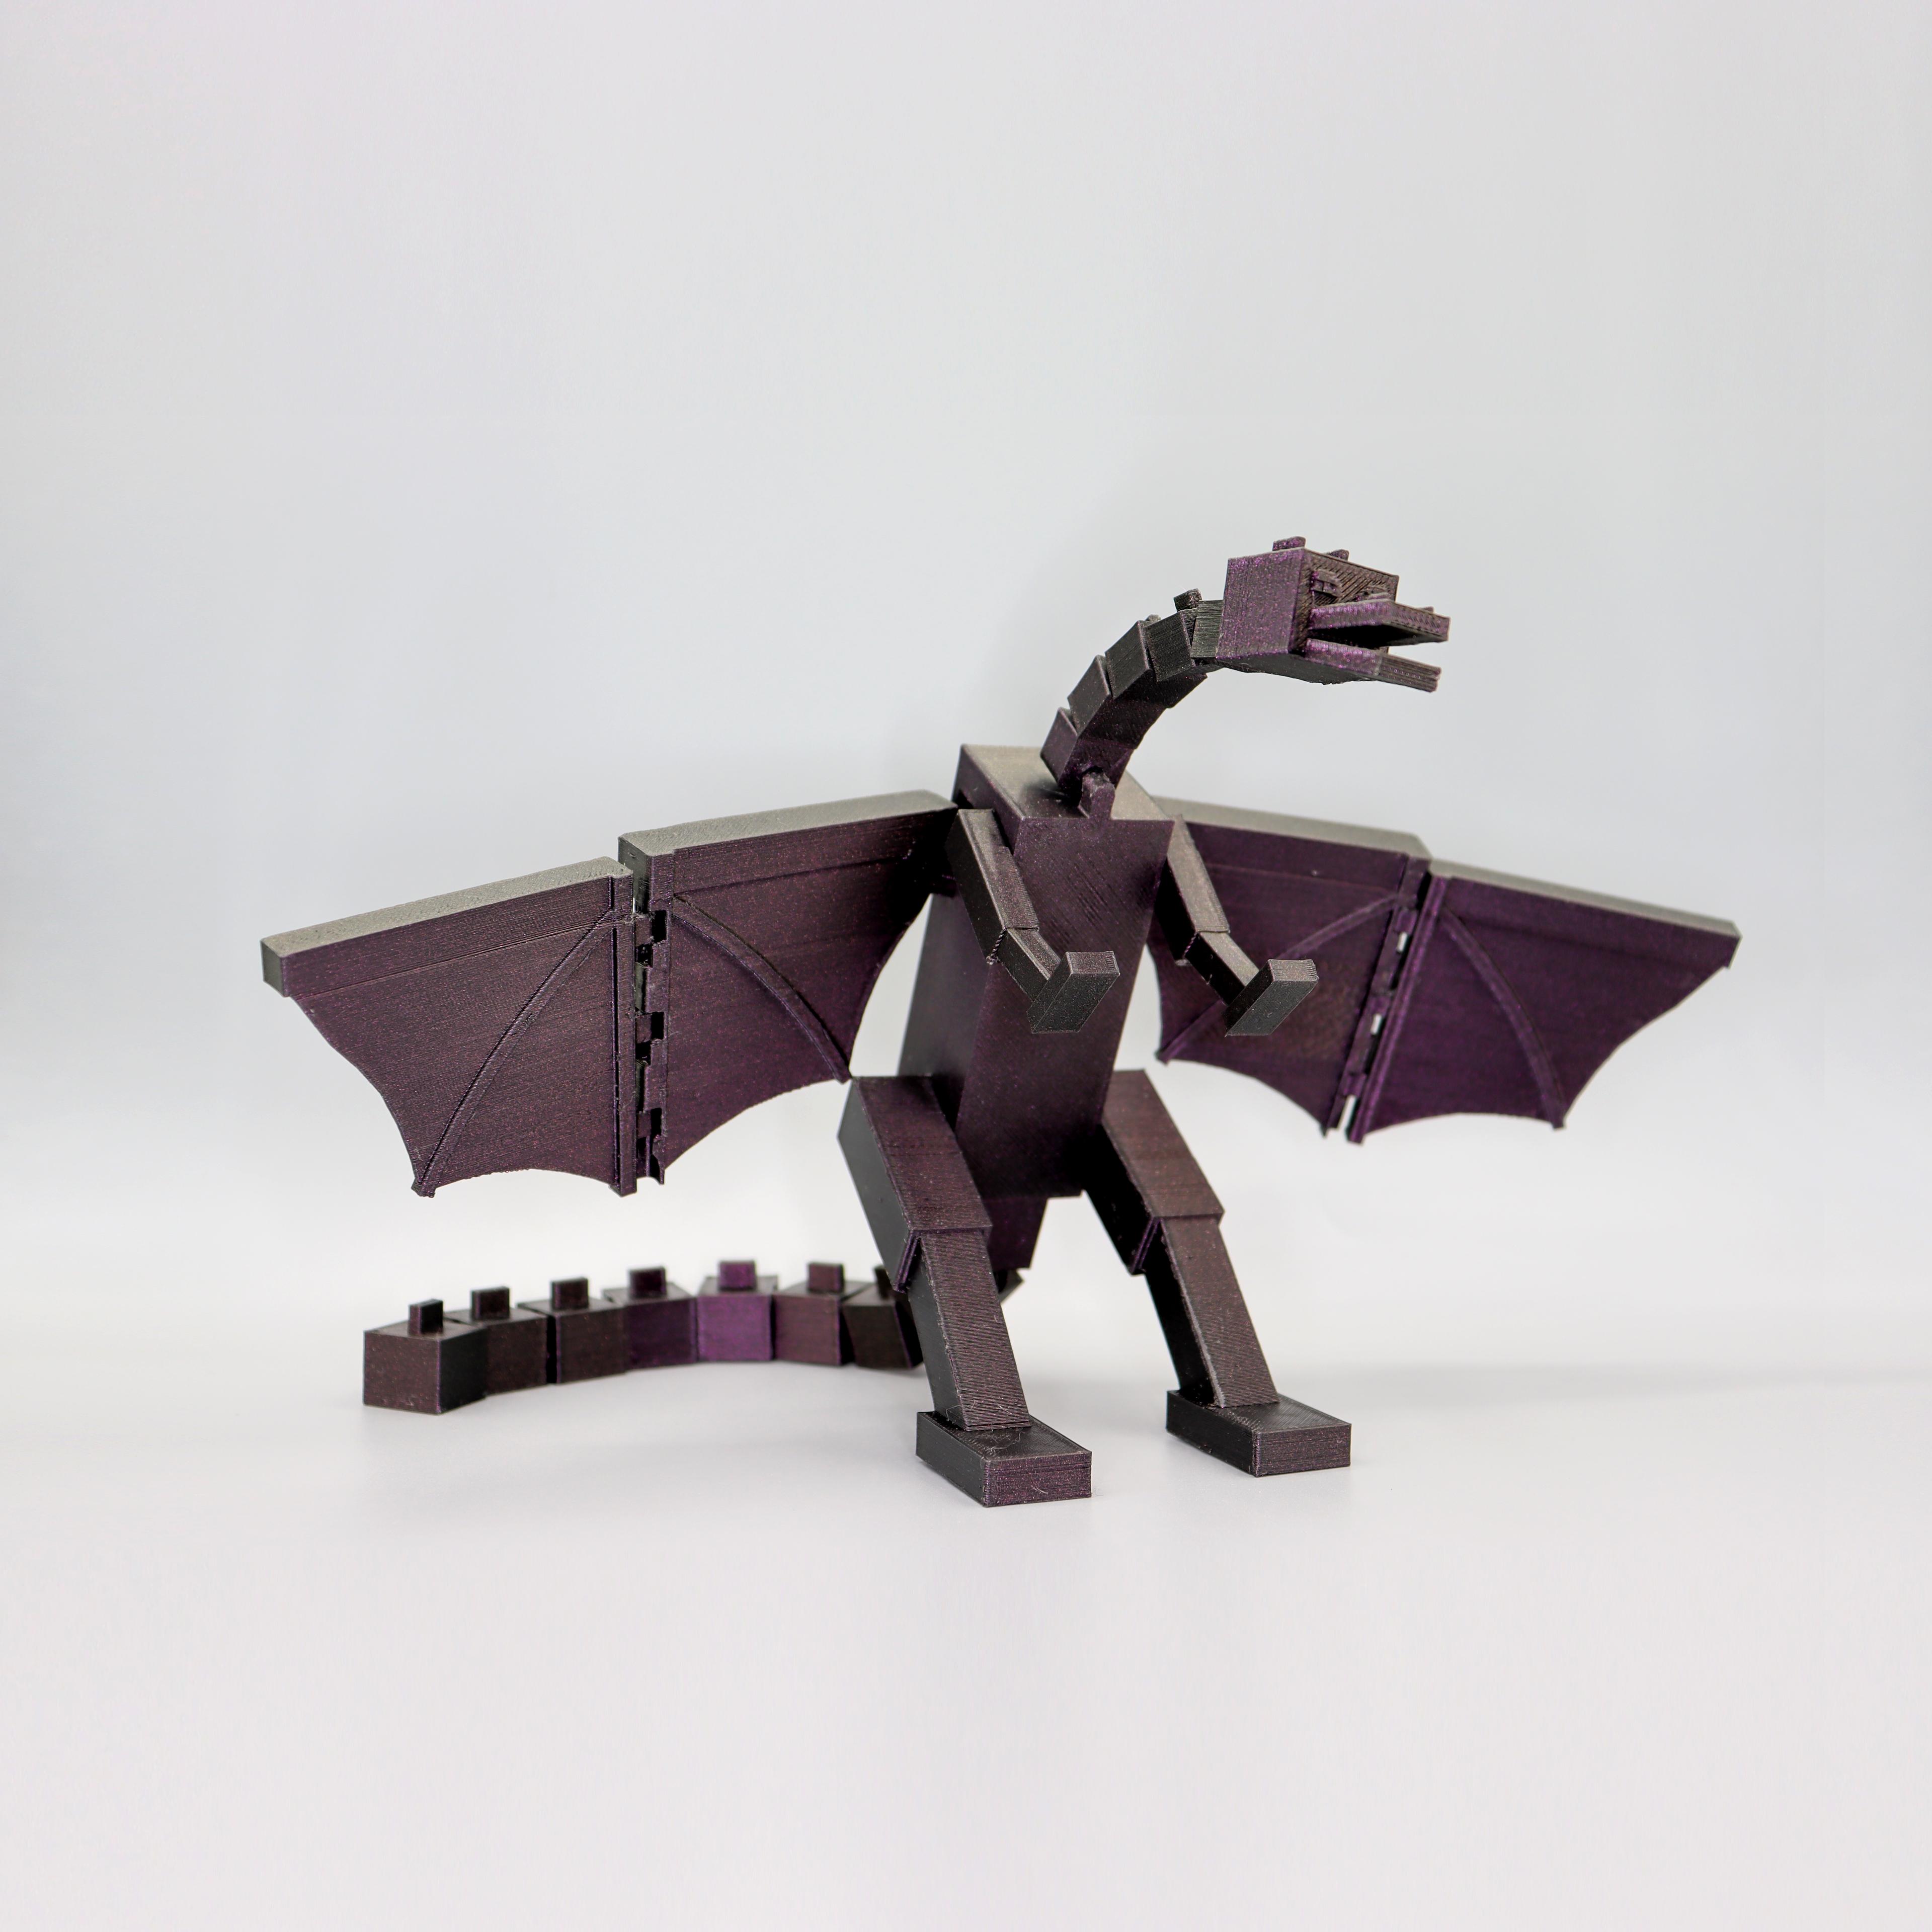 Ender dragon fully articulated 3d model